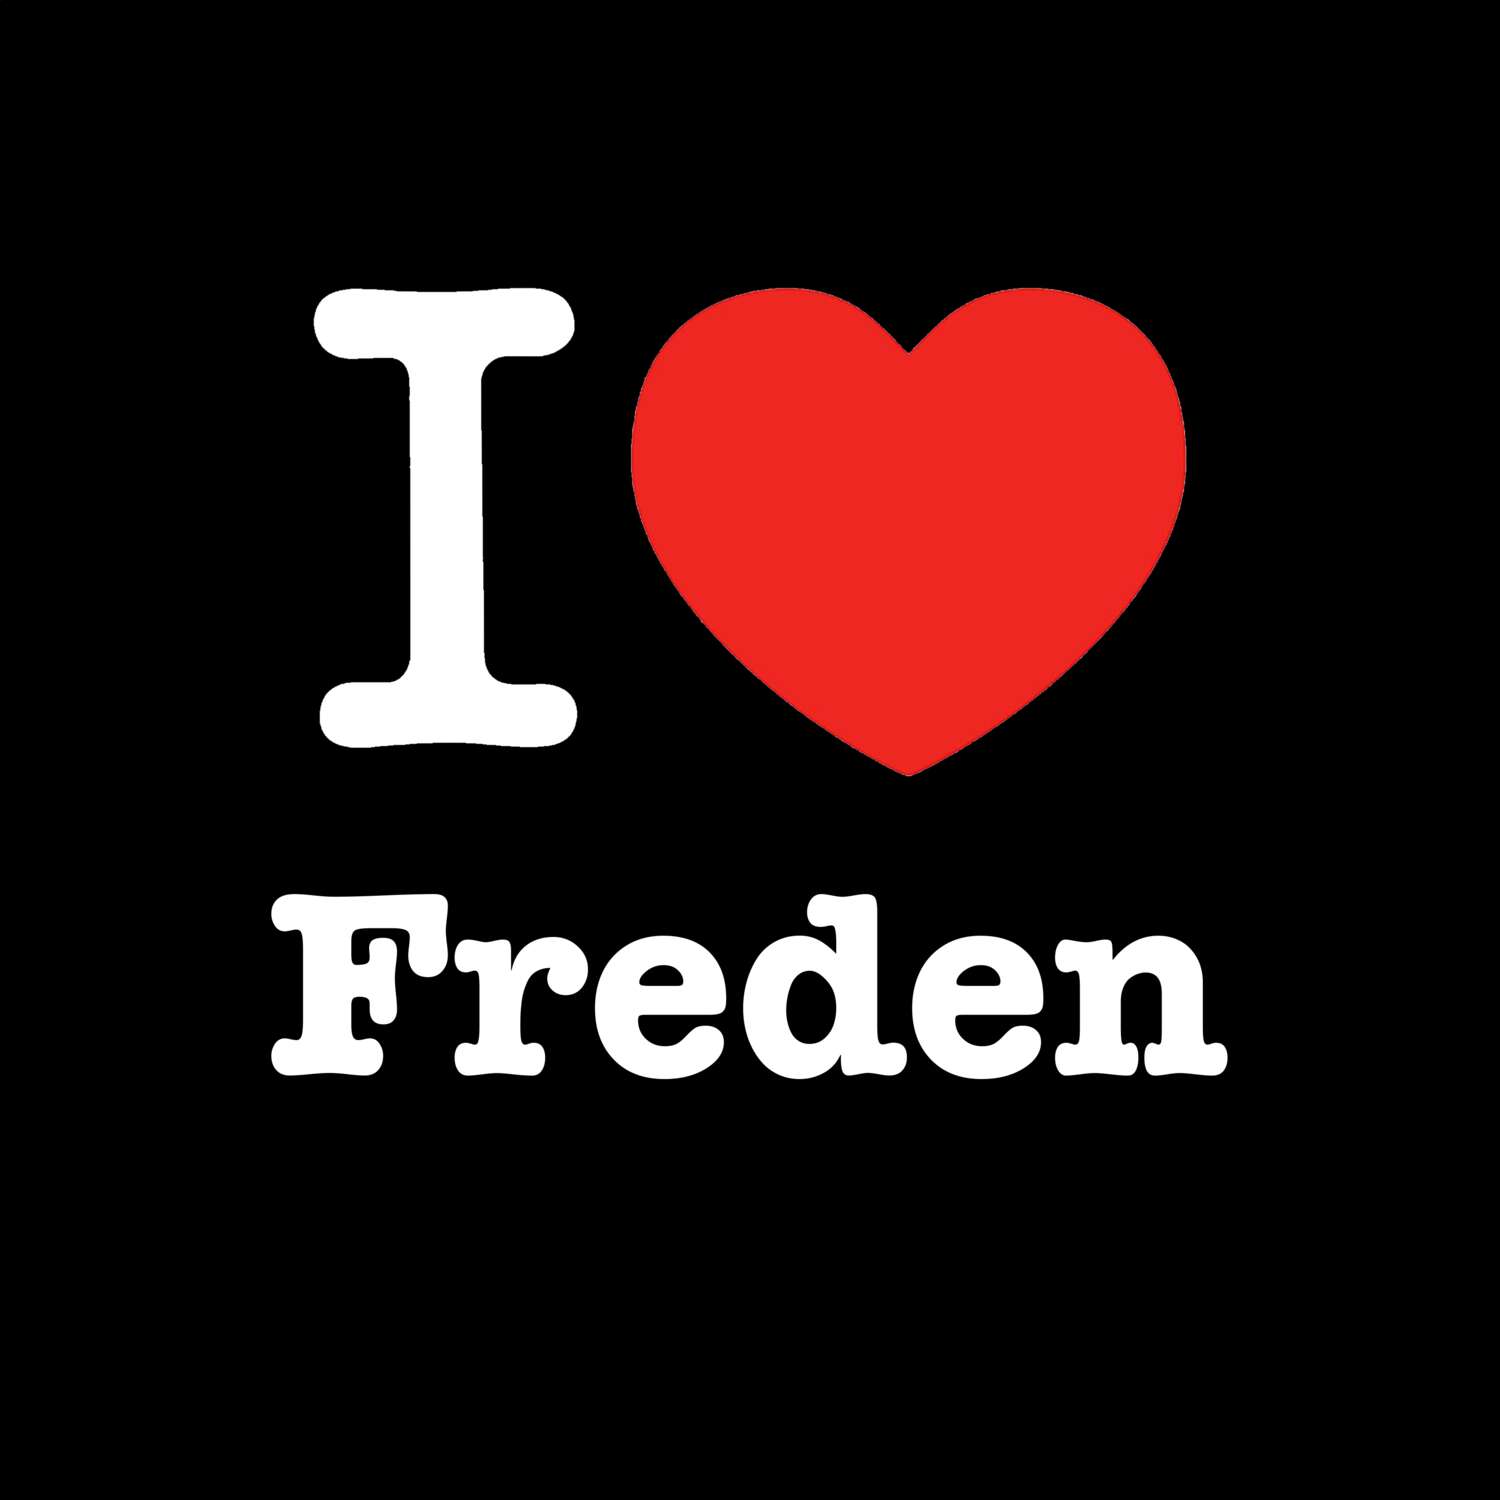 Freden T-Shirt »I love«